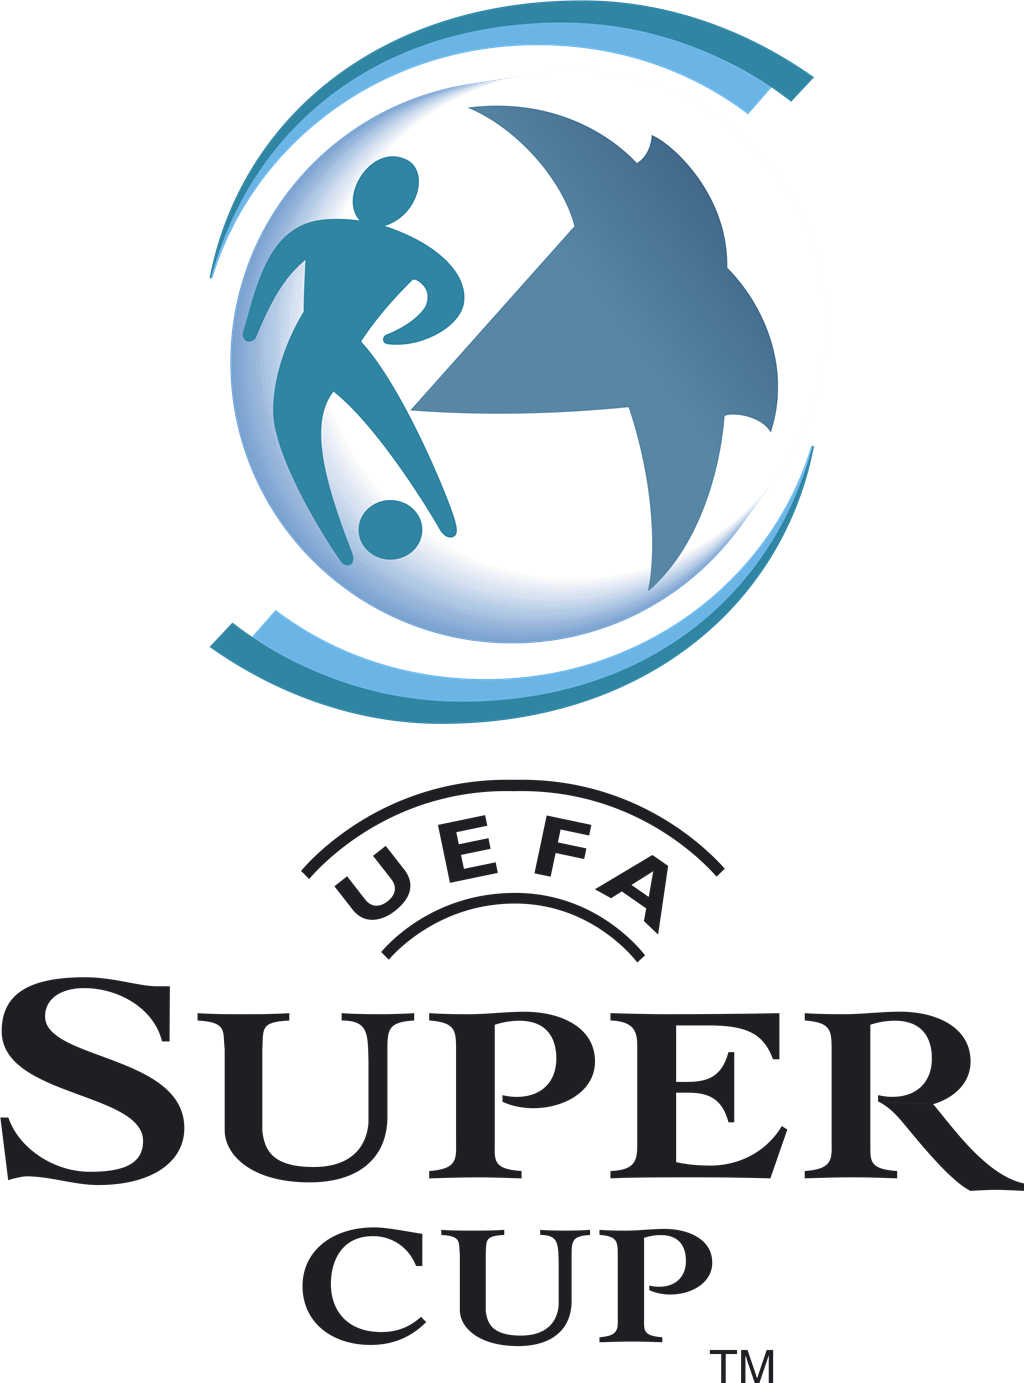 UEFA Super cup logotype, transparent .png, medium, large